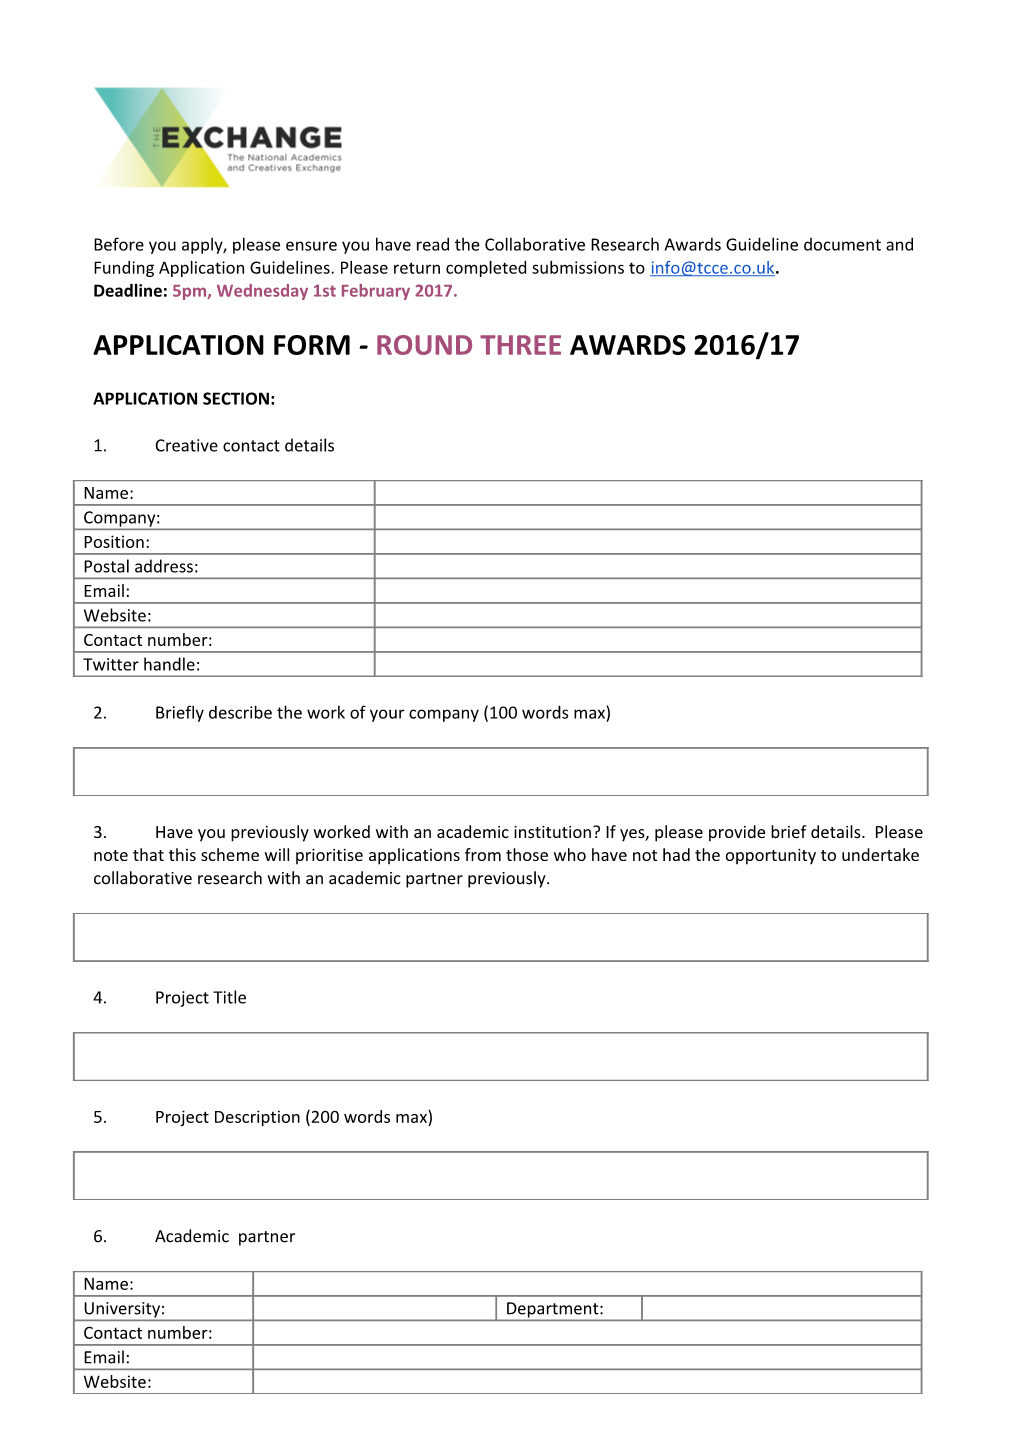 Application Form - Round Three Awards 2016/17